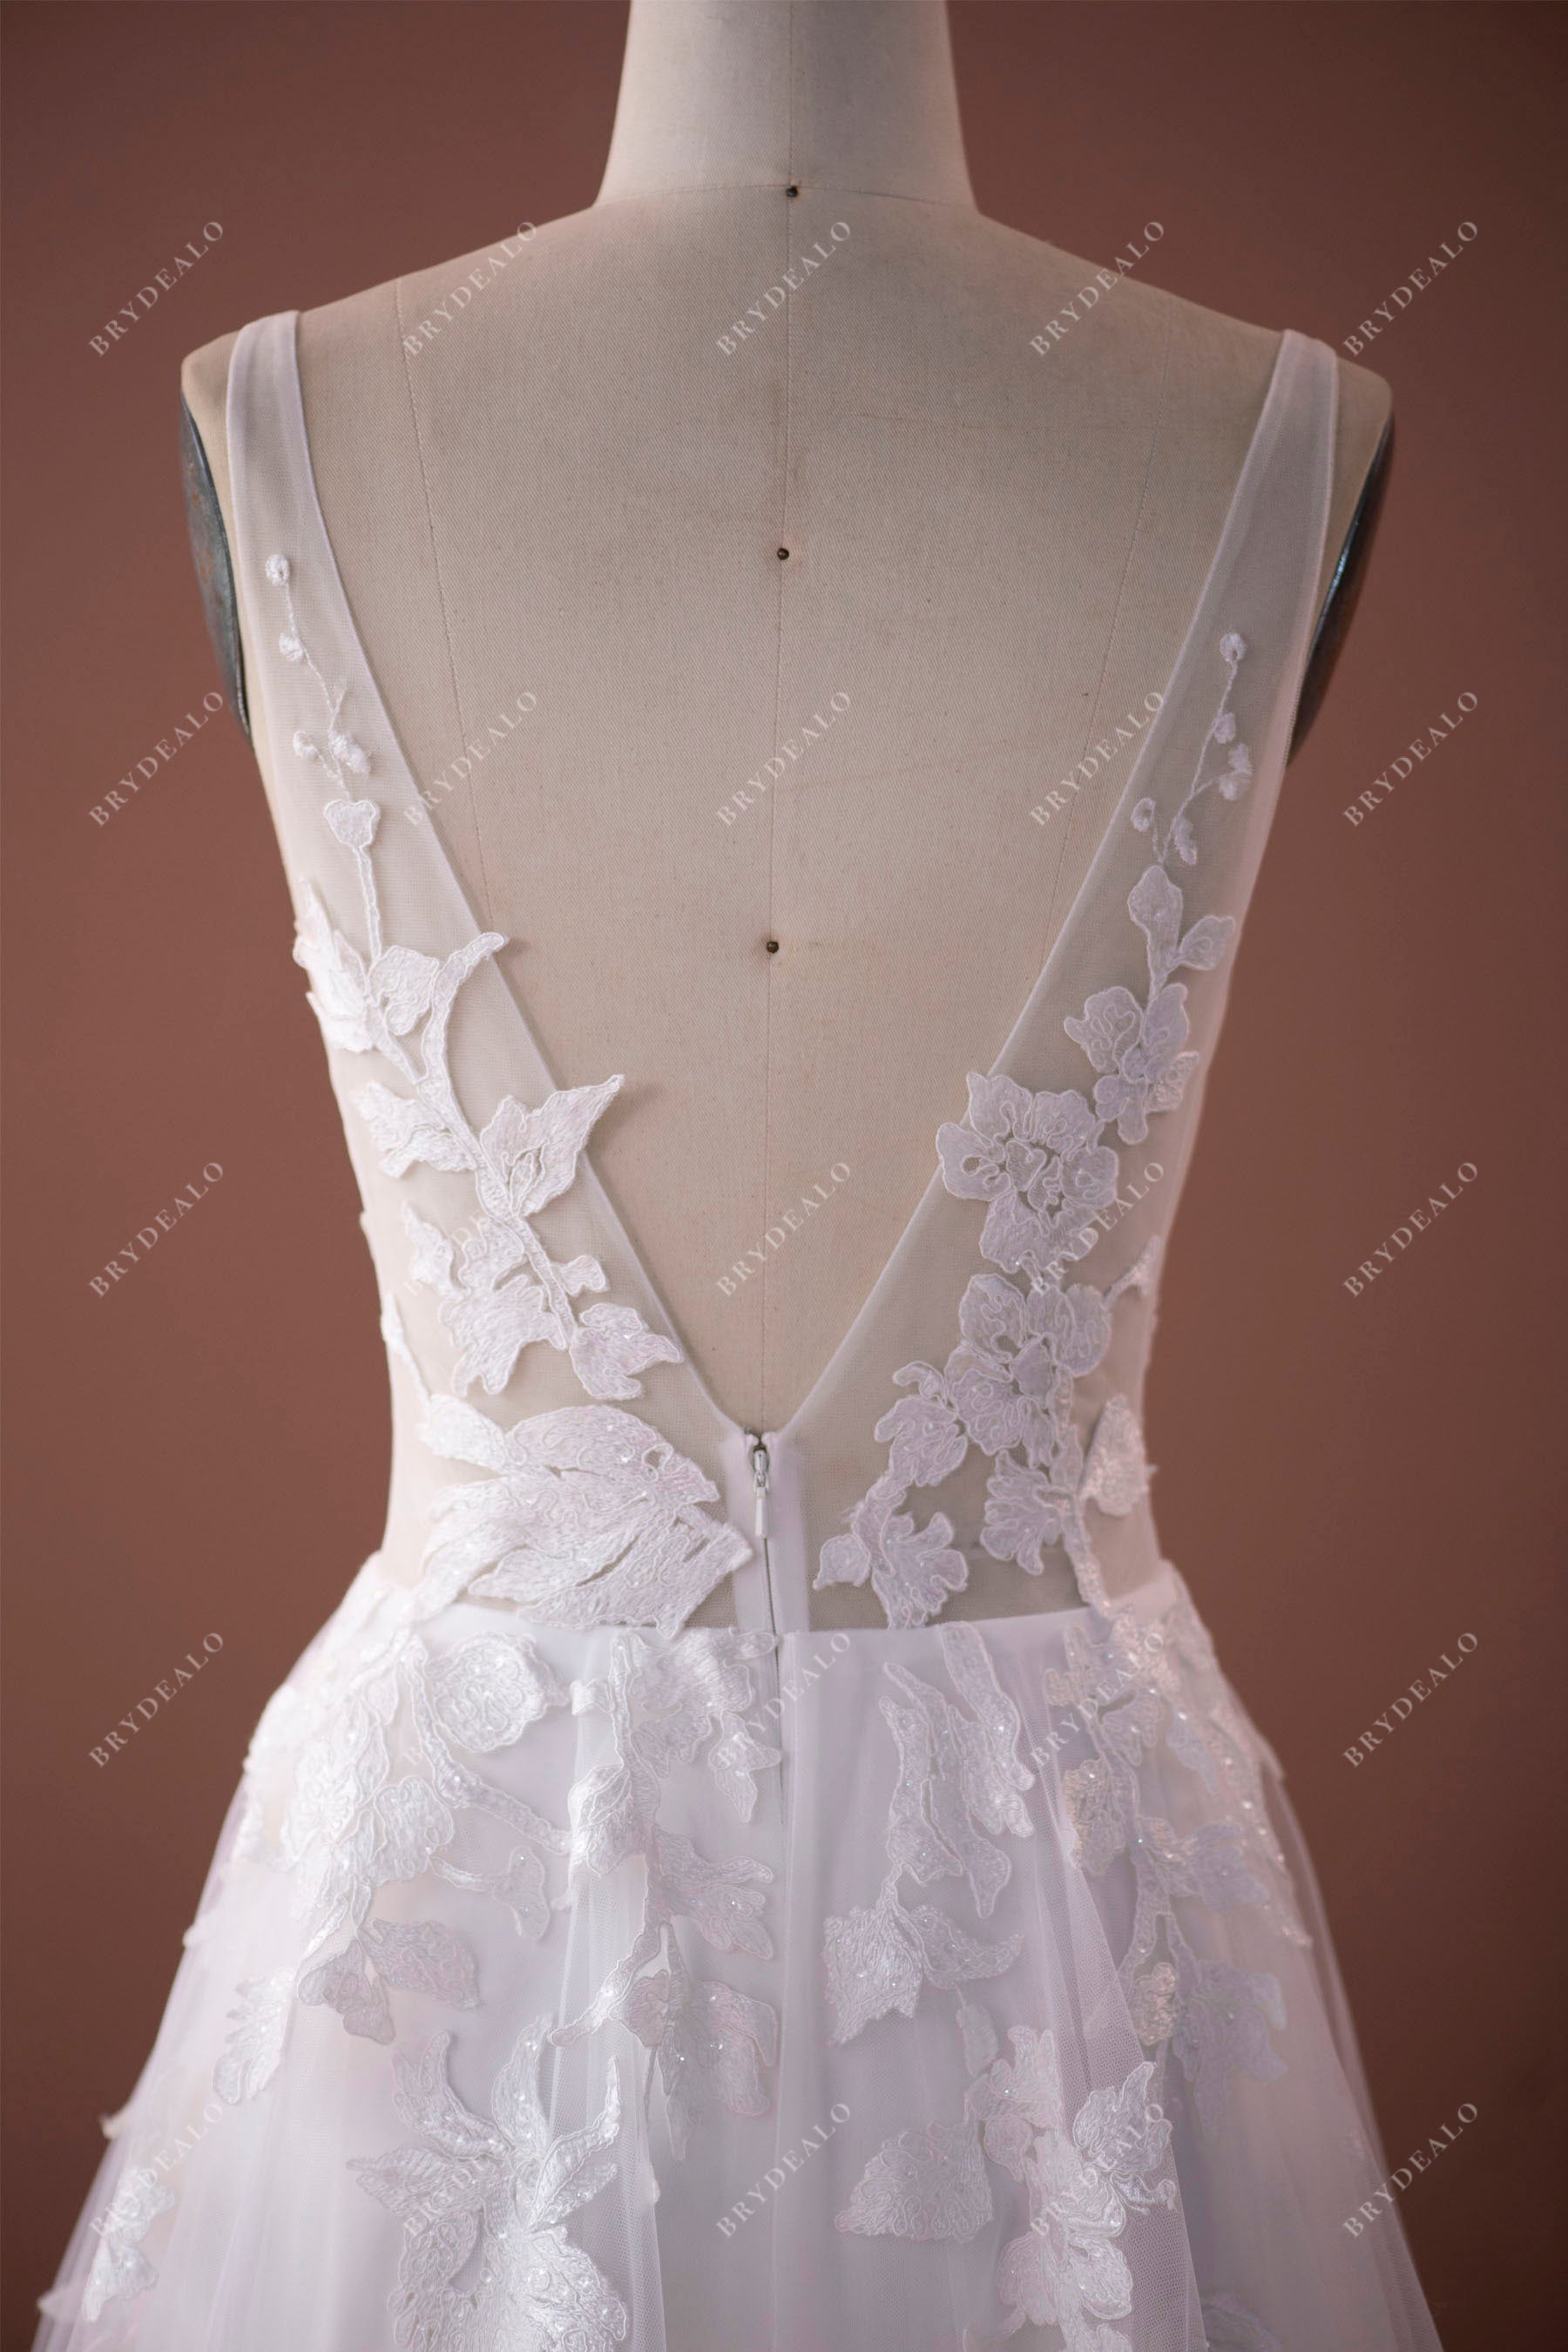 shimmery lace open back A-line wedding dress